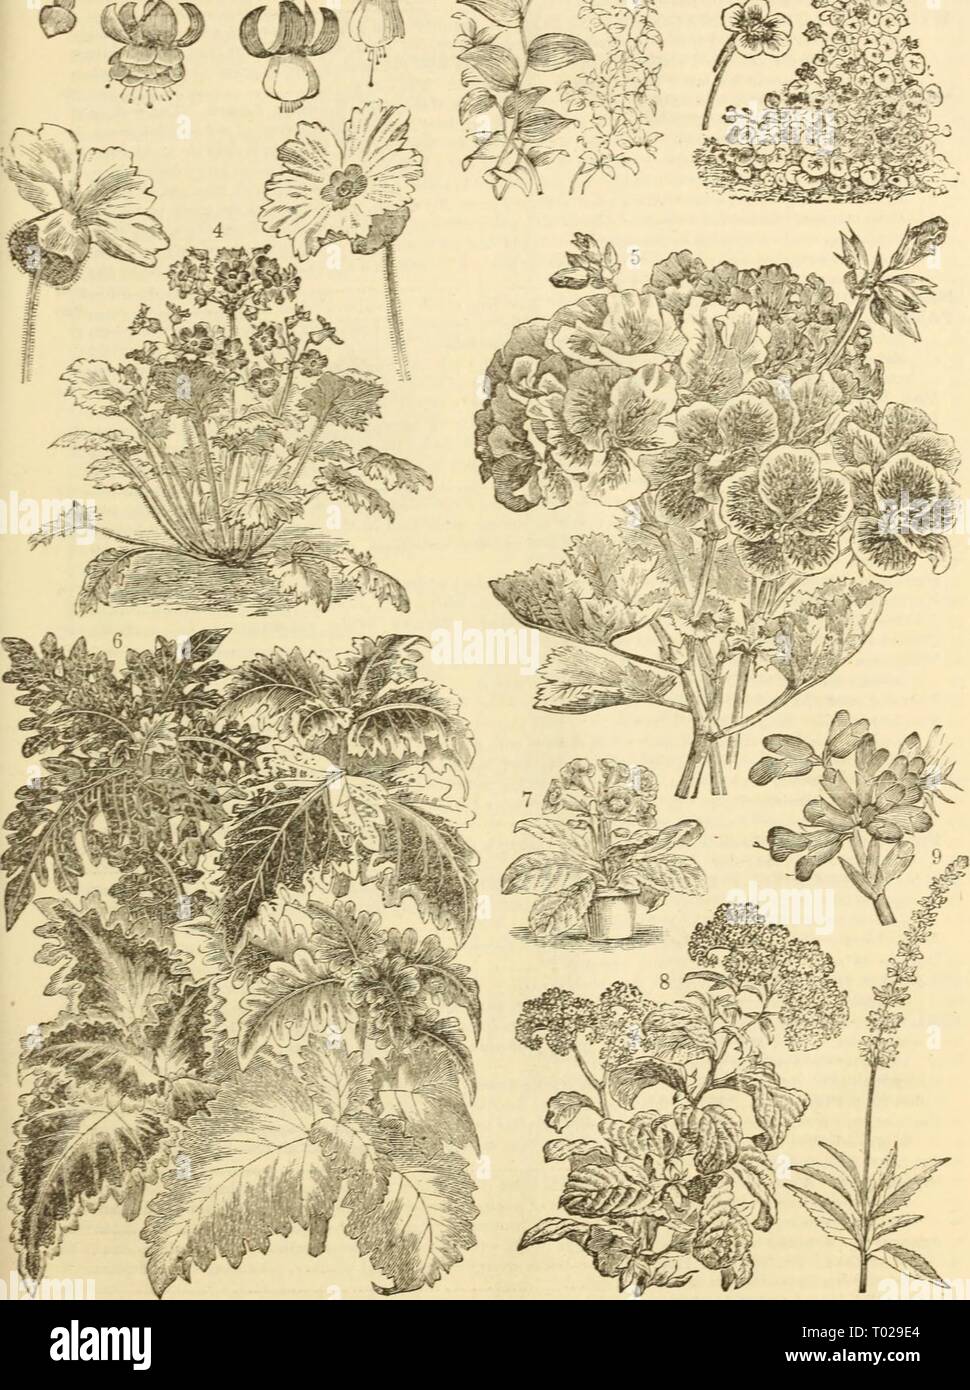 Dreer's garden calendar : 1883 . dreersgardencale1883henr Year: 1883  DREER'S GARDES CALEXDAR. 79 * ^S?K 5 £-£S^»    i. Fuchsia, Double and Single. ' 4. Primula Sinensis Fimeeiata, 6. Dreer'sHybridColewsVarieti: 2. Myrsiphyllum Asparagoides, or Chinese Variety. 7. Gloxinia Crassifolia Variety Smilax. 5. Geranium,or Pelargonium, Lady 3. Heliotrope Variety. 3. Trop^eolum Lobeianum Variety. Washington Variety. }. Salyia Farinagea. Stock Photo